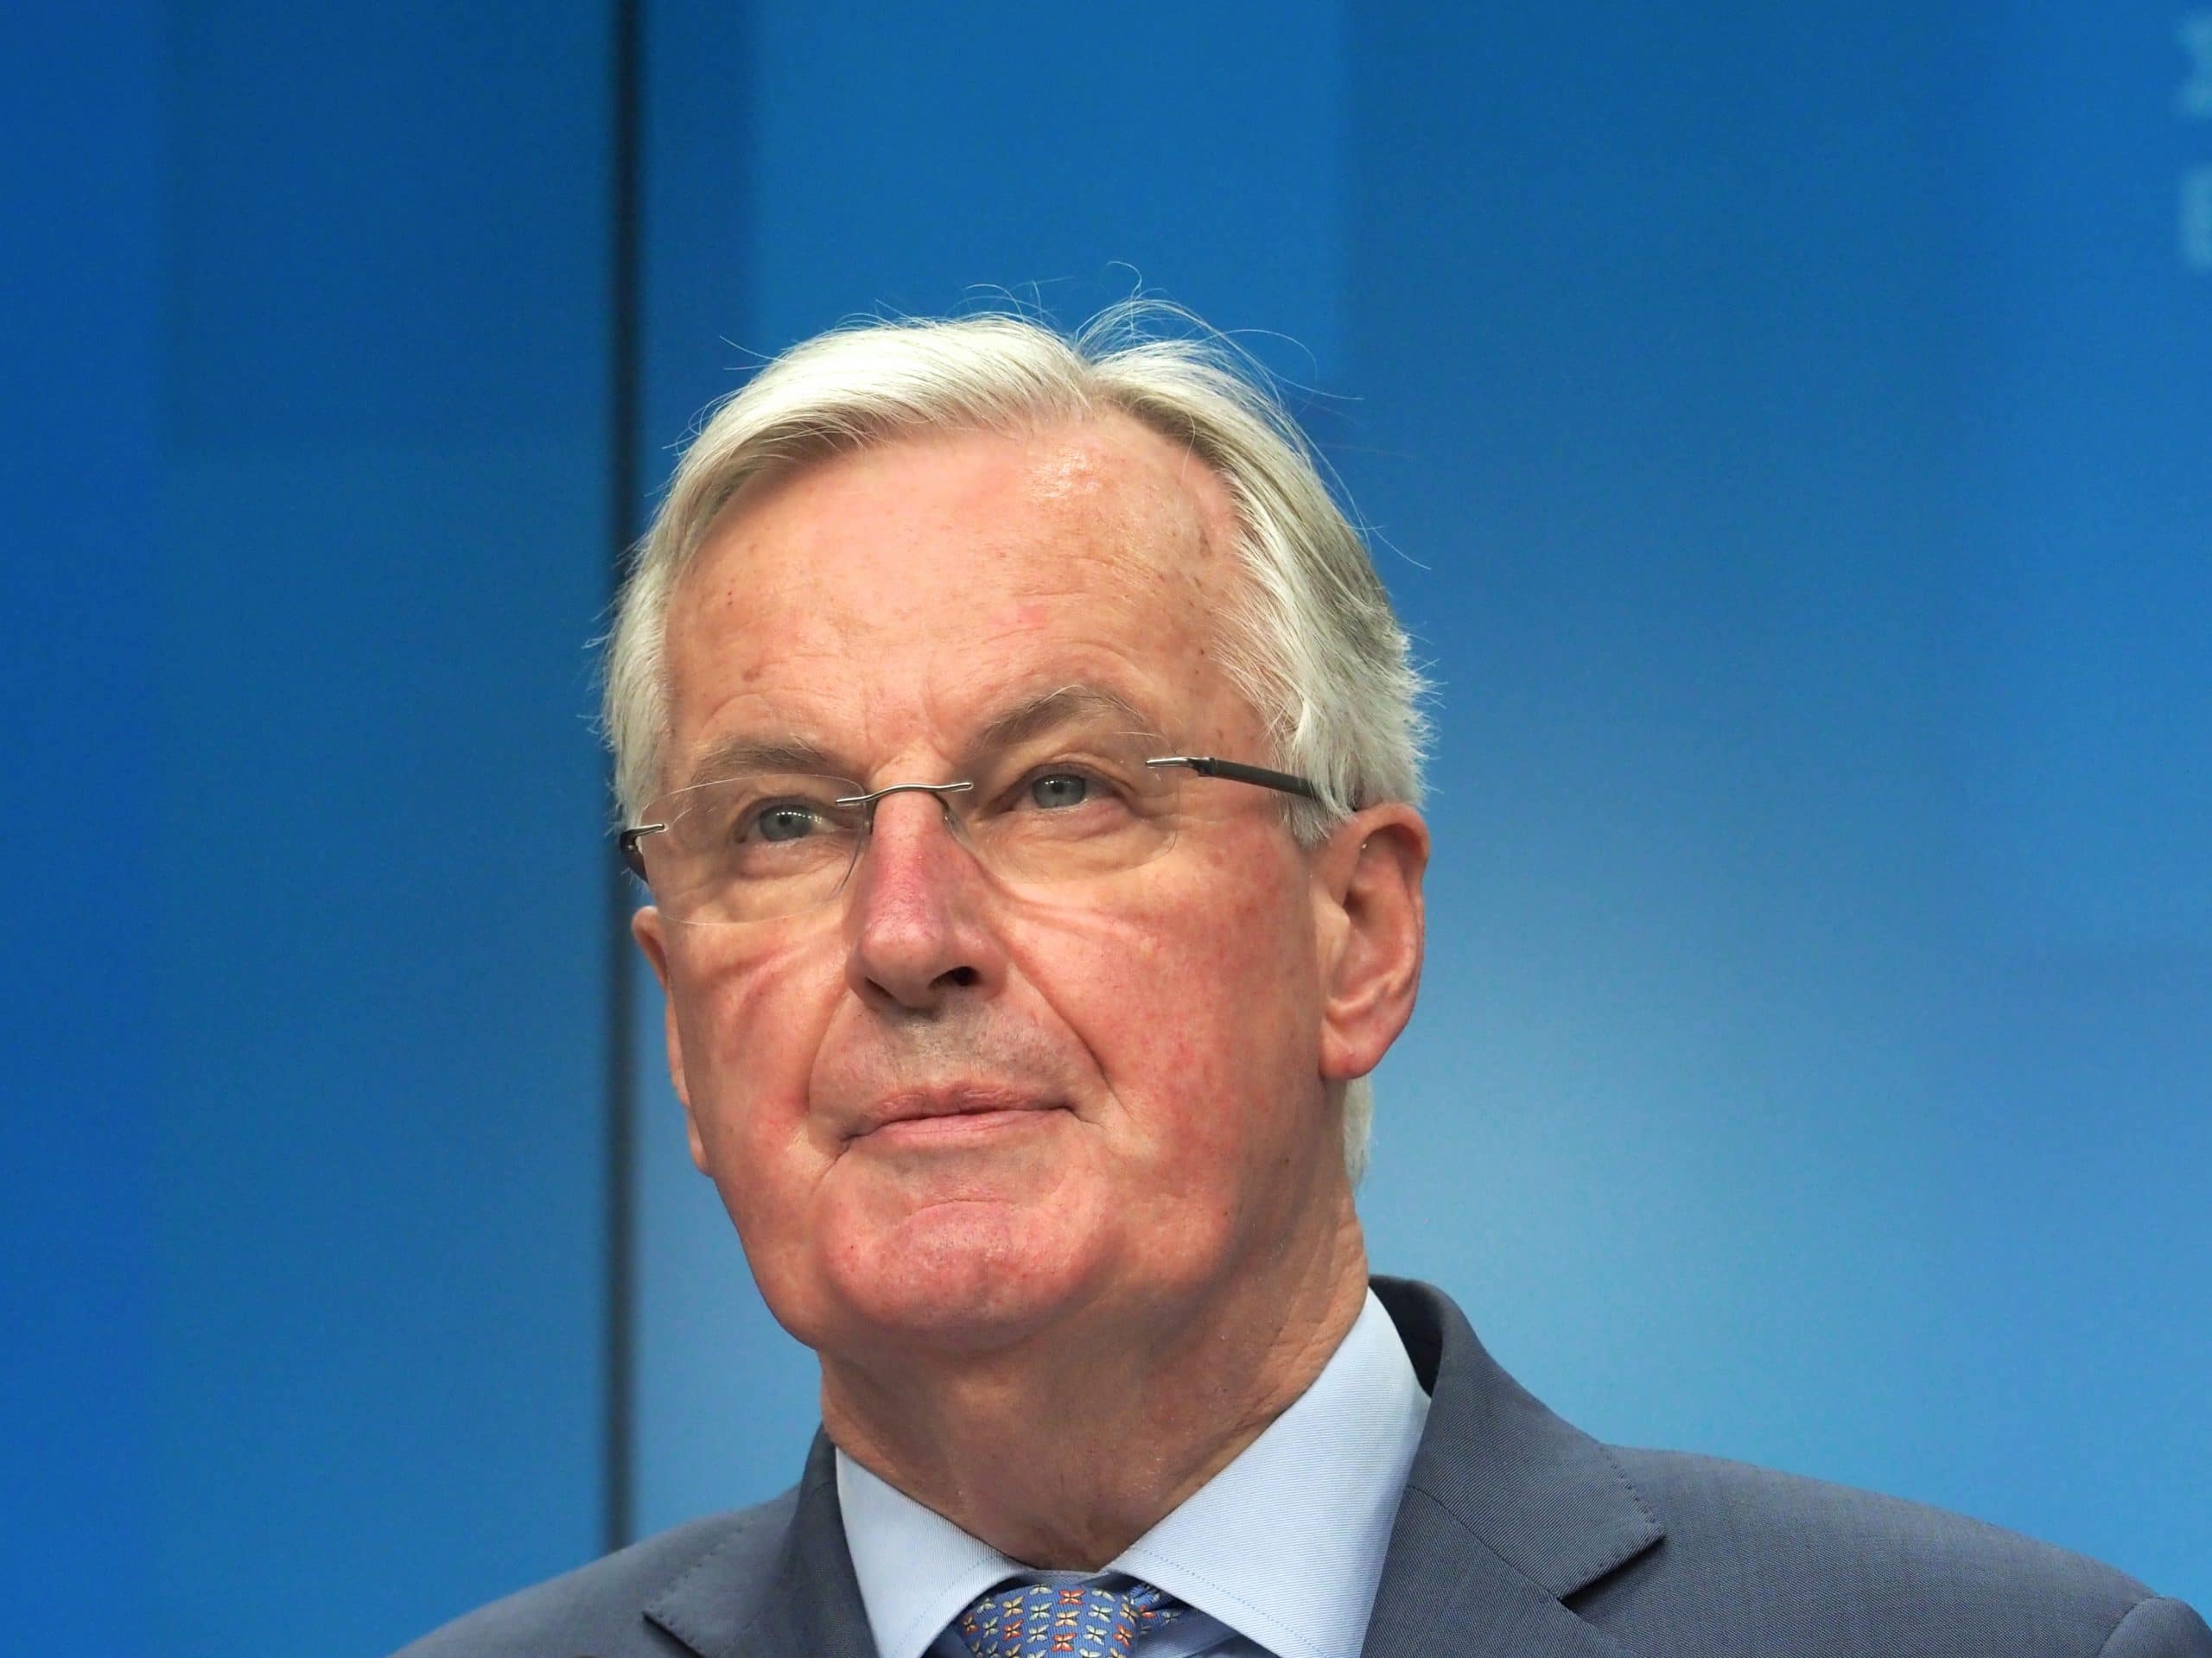 Michel Barnier earlier this year